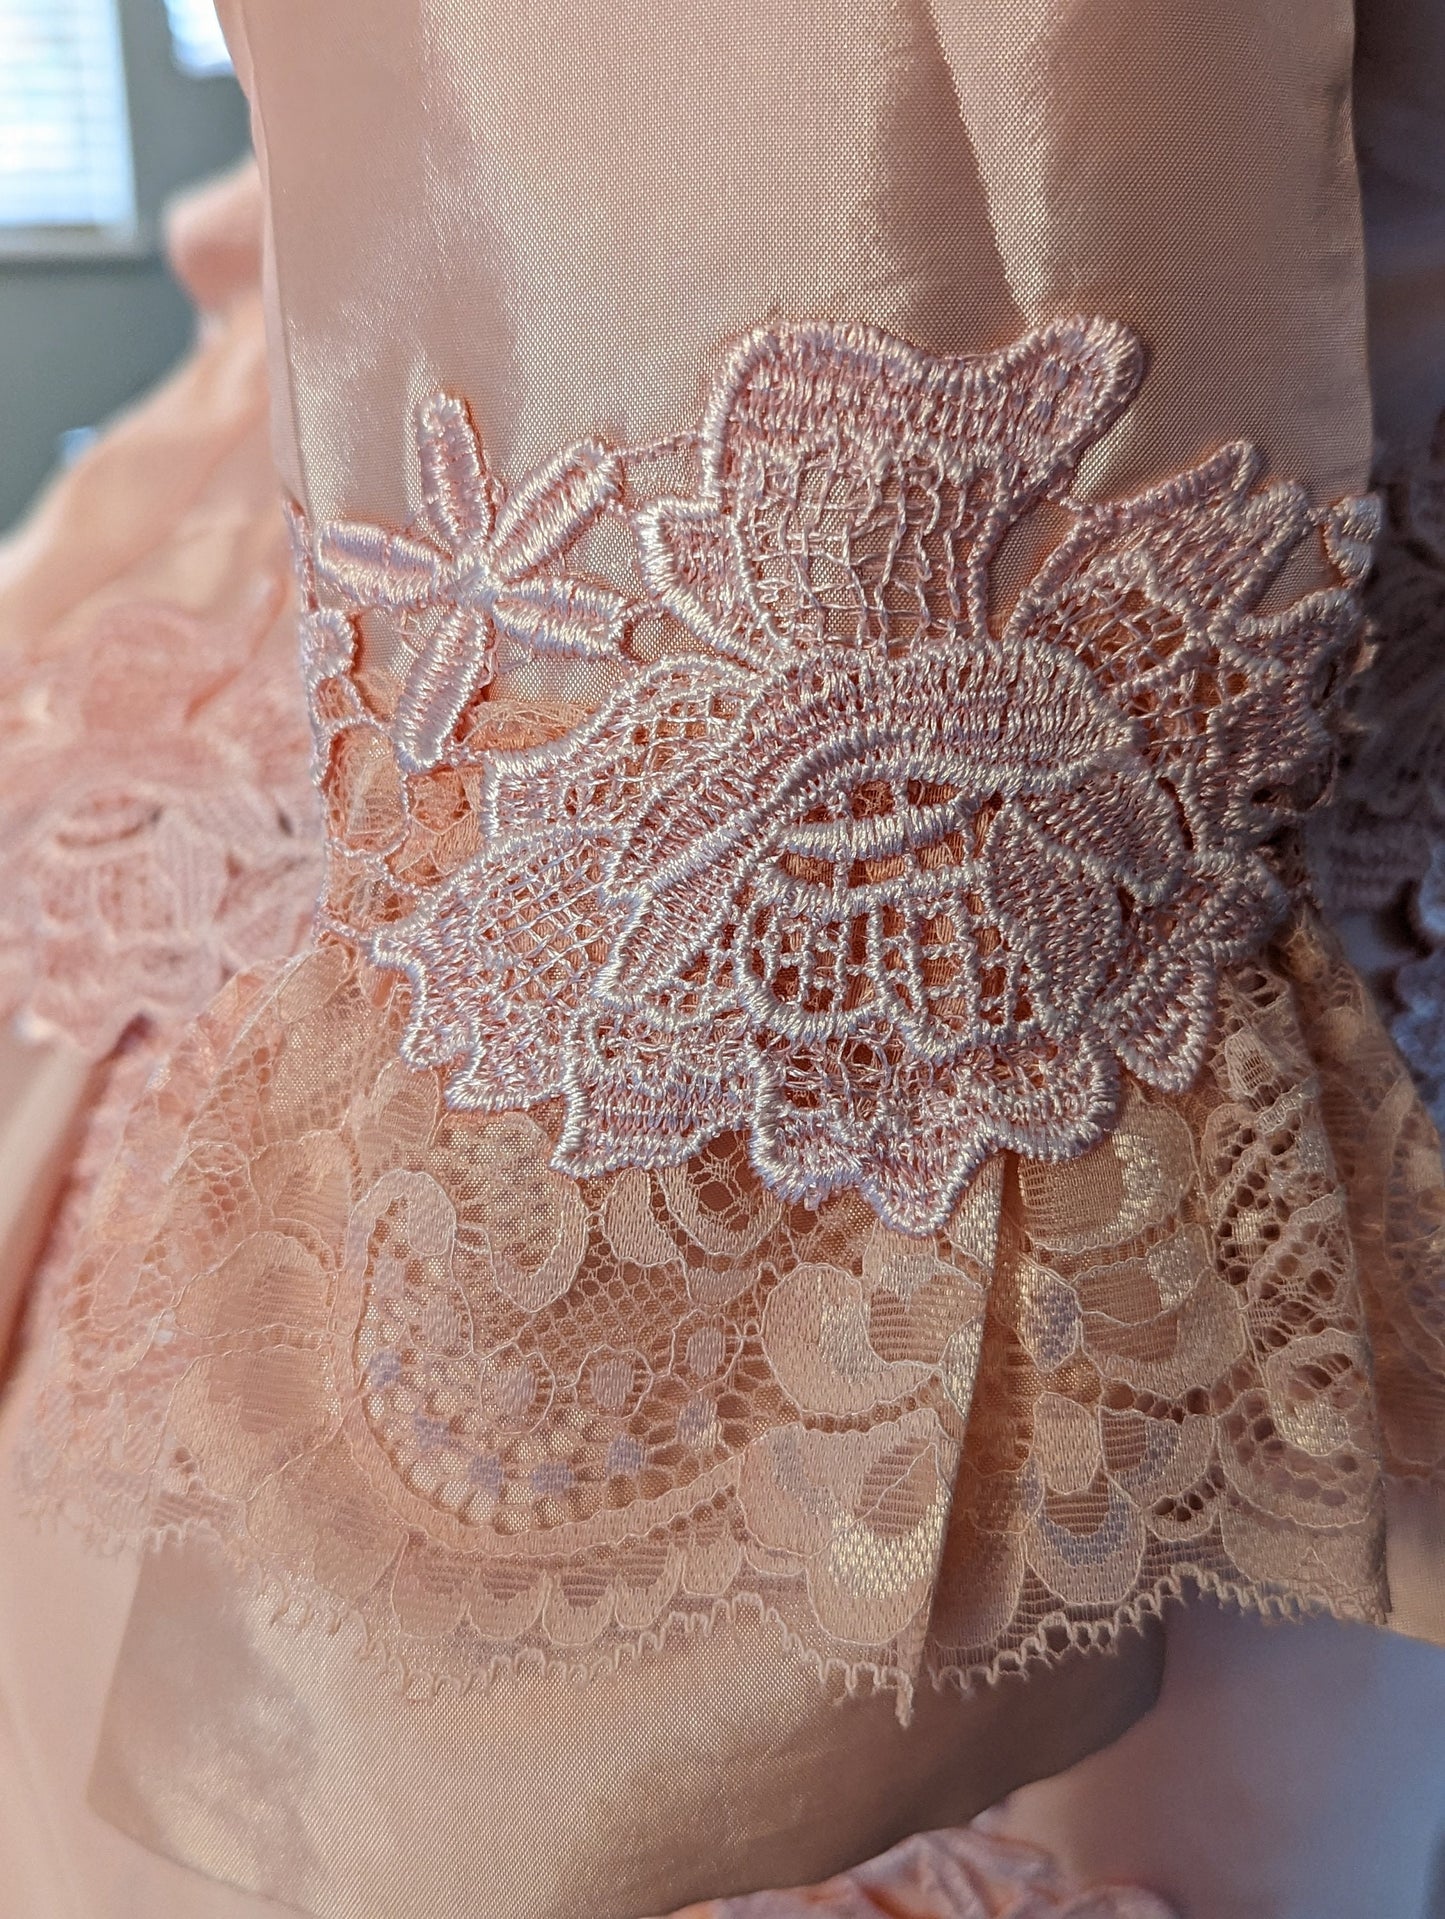 
                  
                    Peach Victorian  Bustle Dress, Victorian costume, pink Bustle dress
                  
                